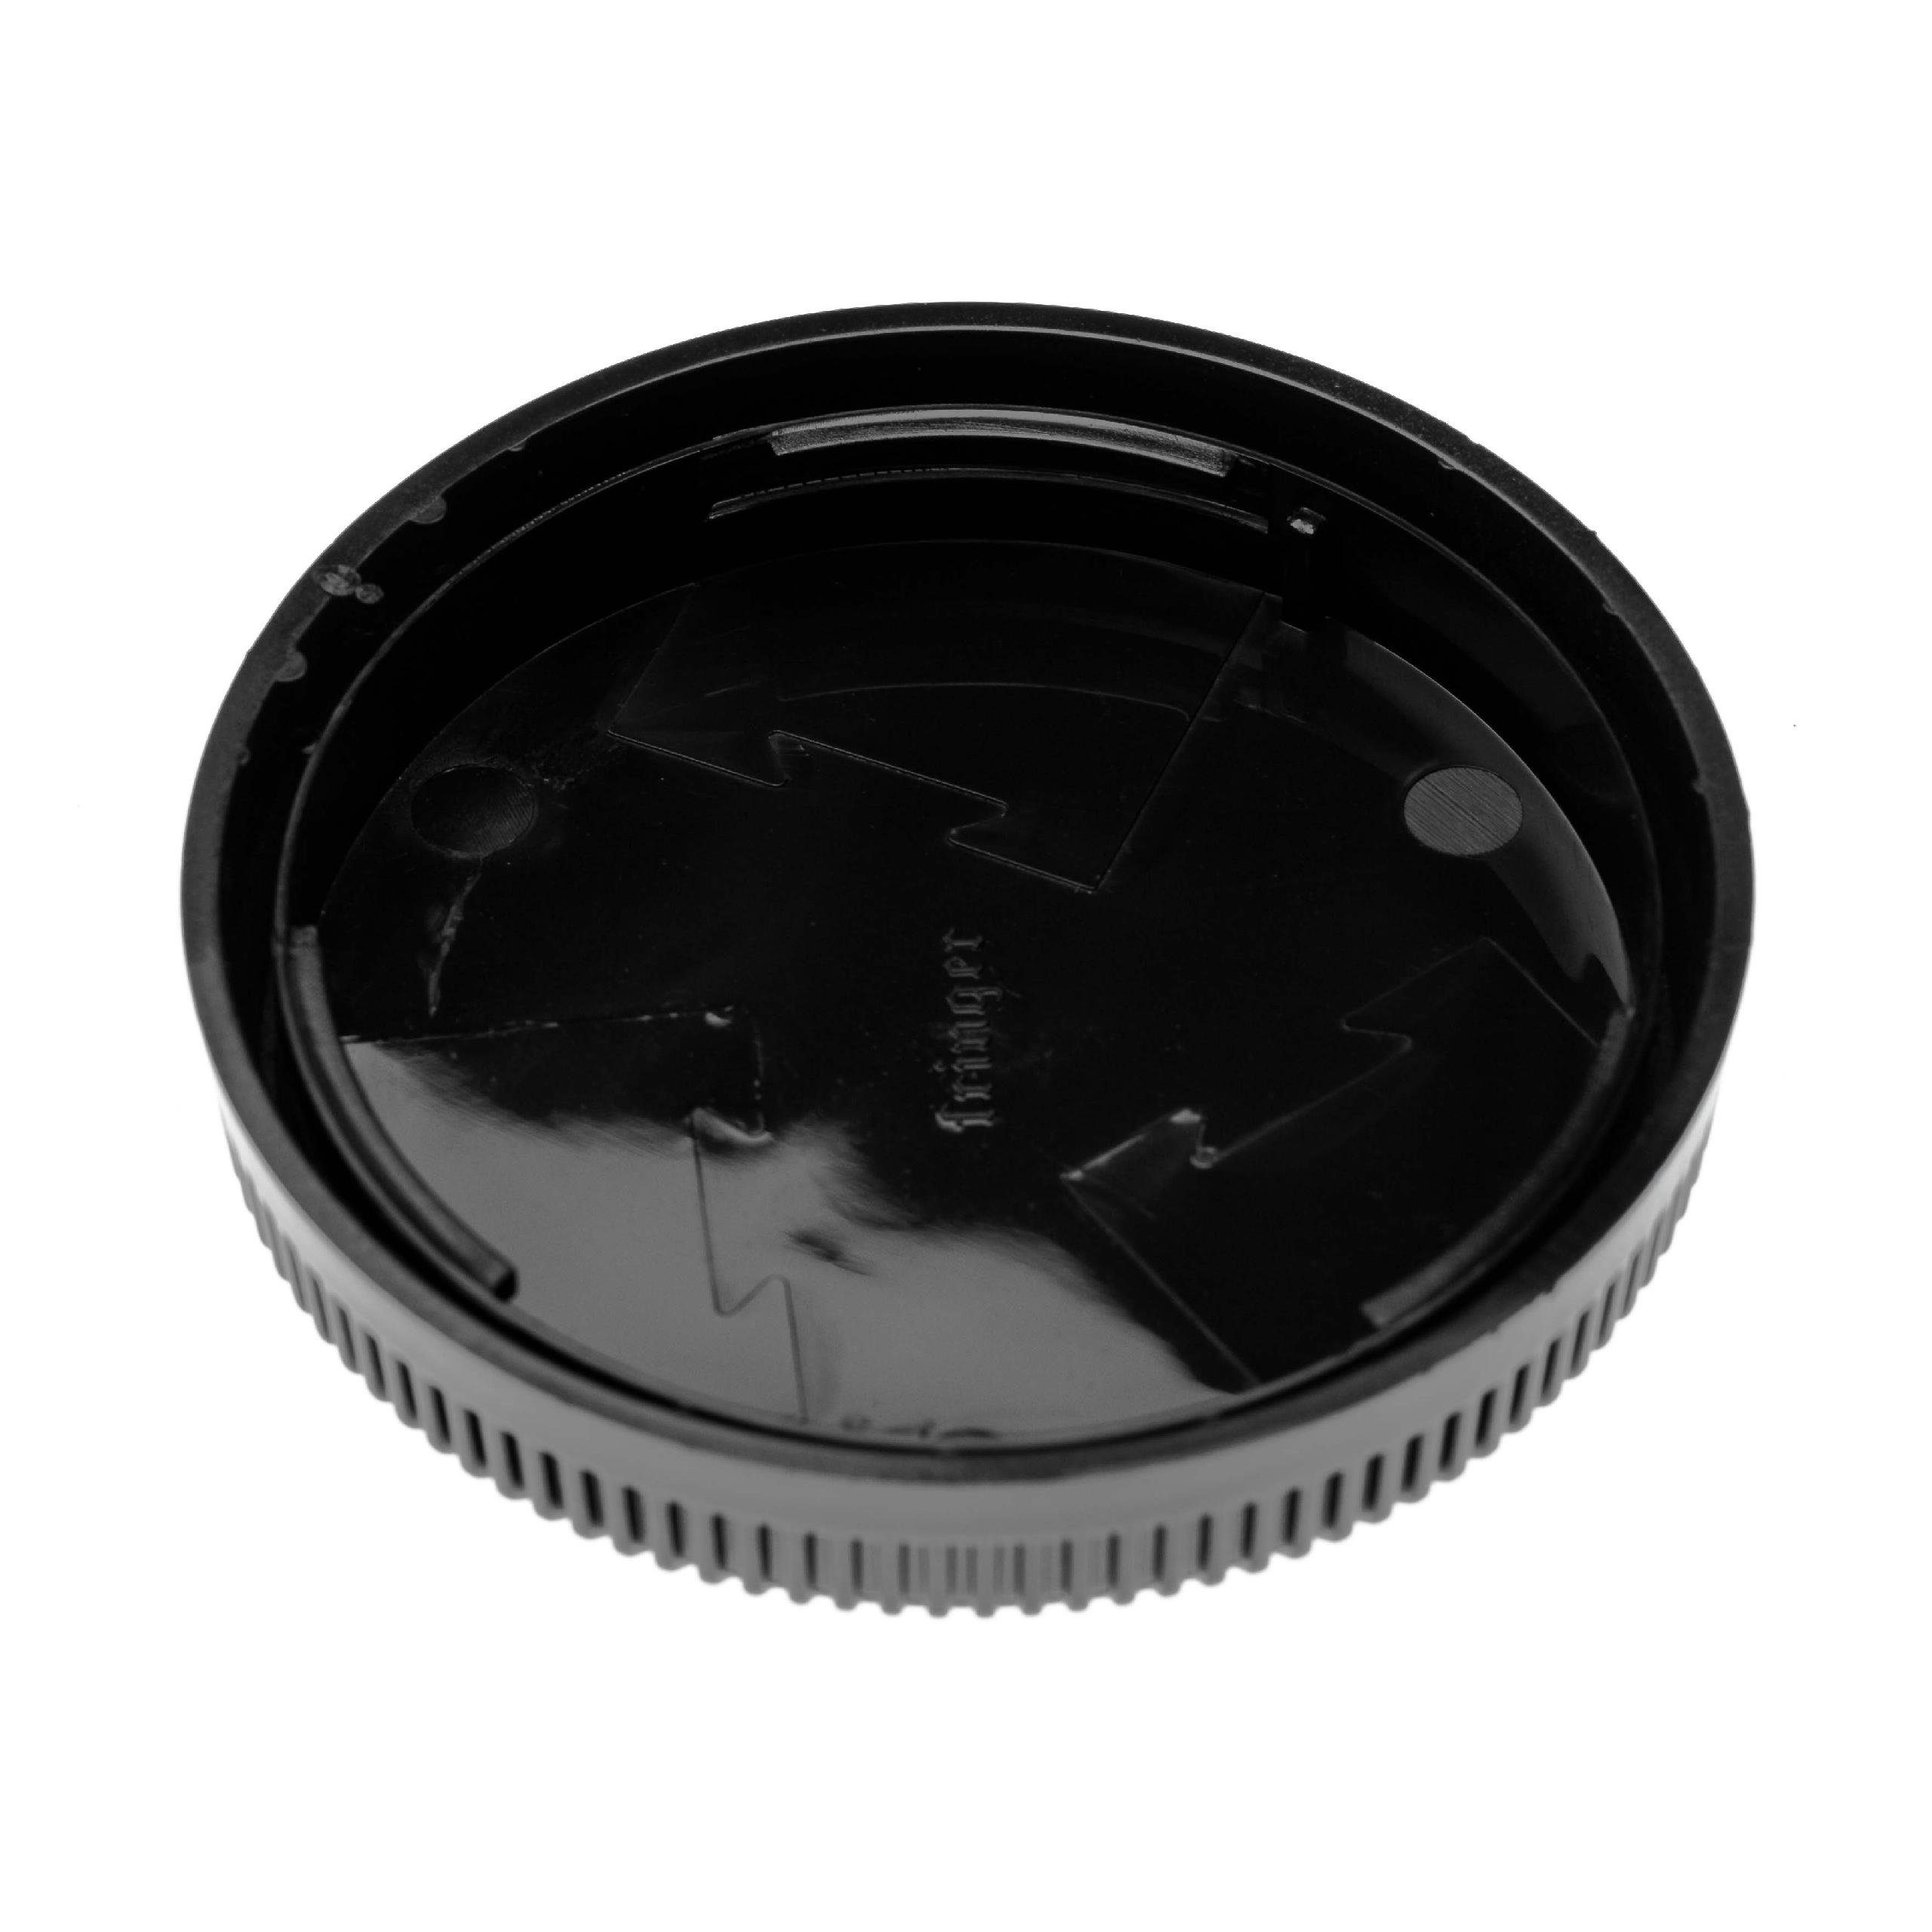 GFX-Serie Fujifilm vhbw für passend Kamera Objektivrückdeckel